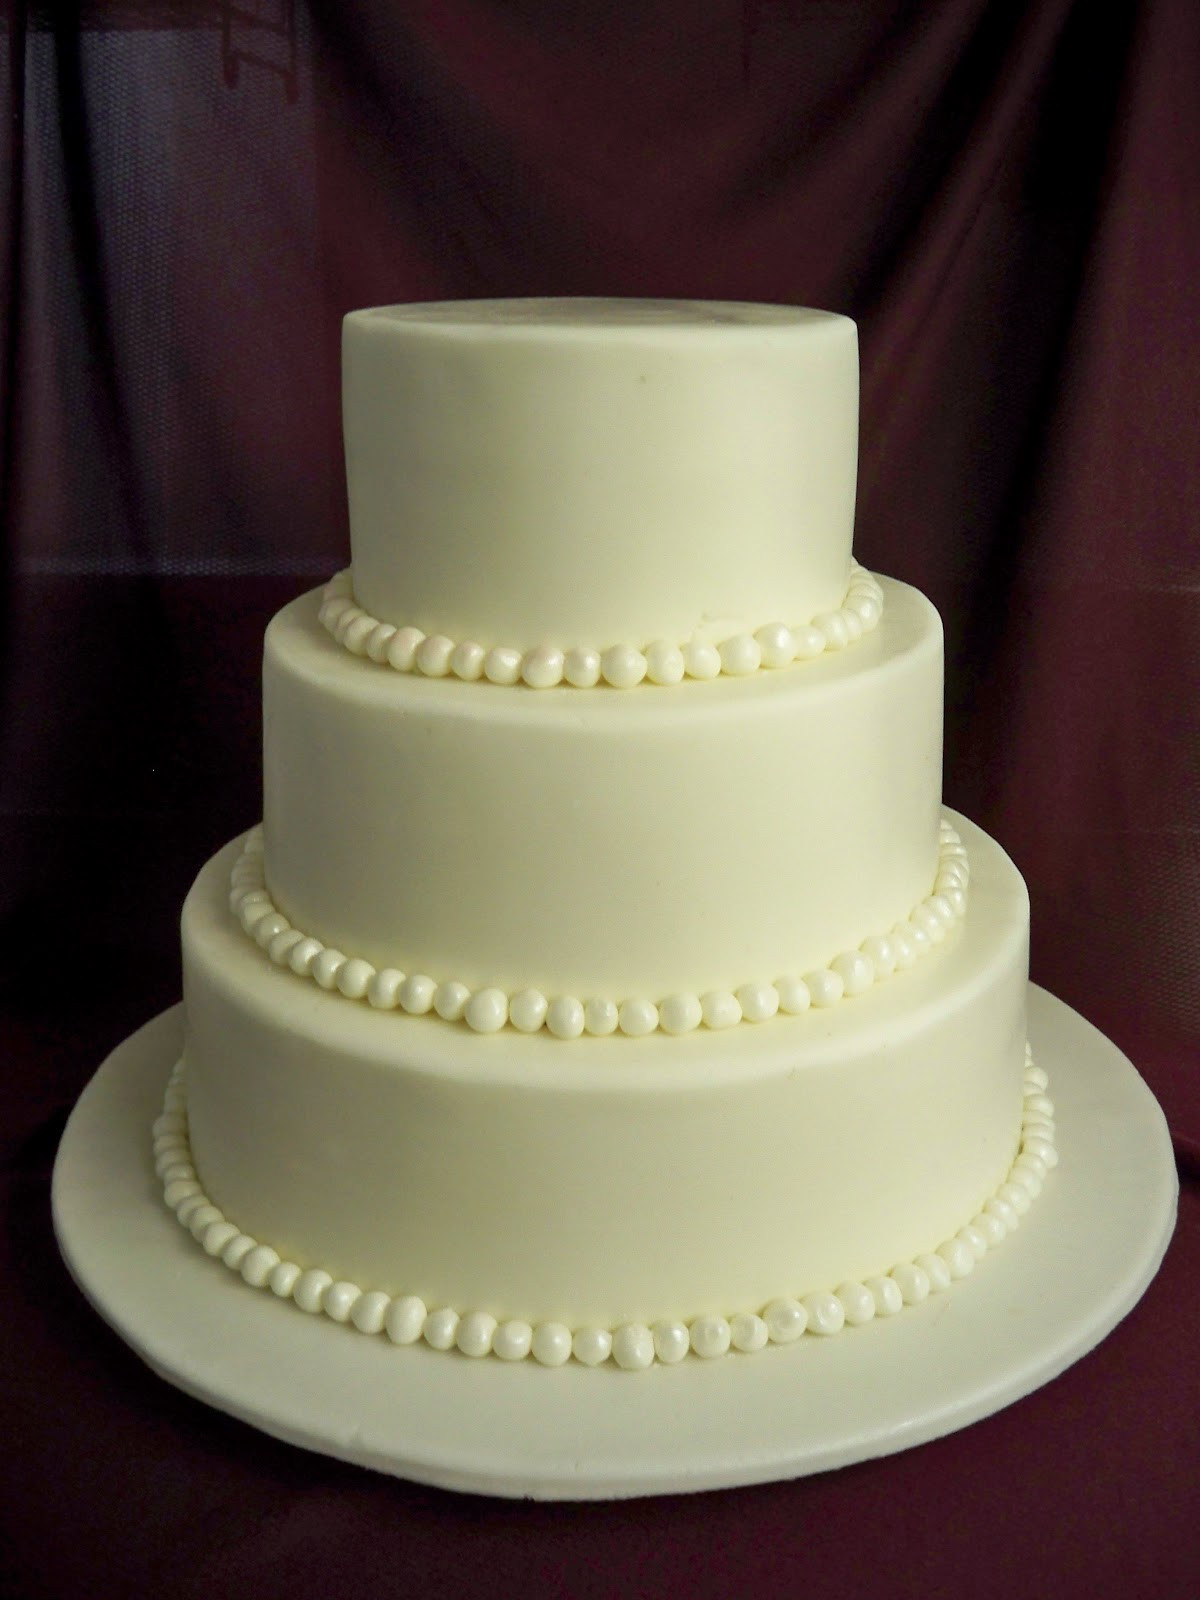 3 Tier Wedding Cakes Prices
 3 tier wedding cake prices idea in 2017